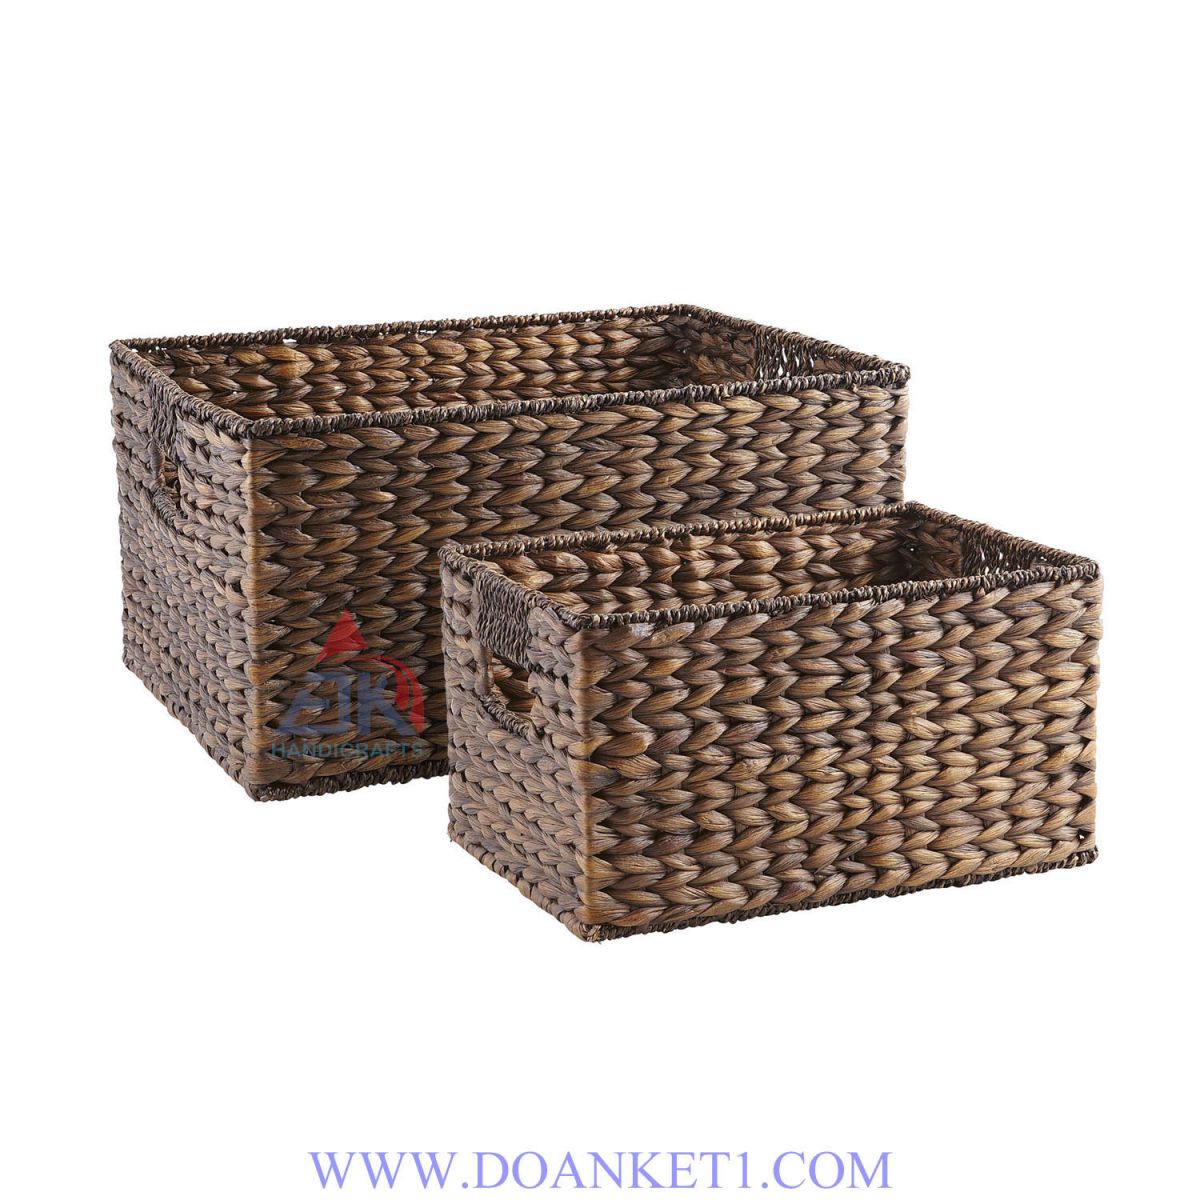 Water Hyacinth Basket S/2 # DK309